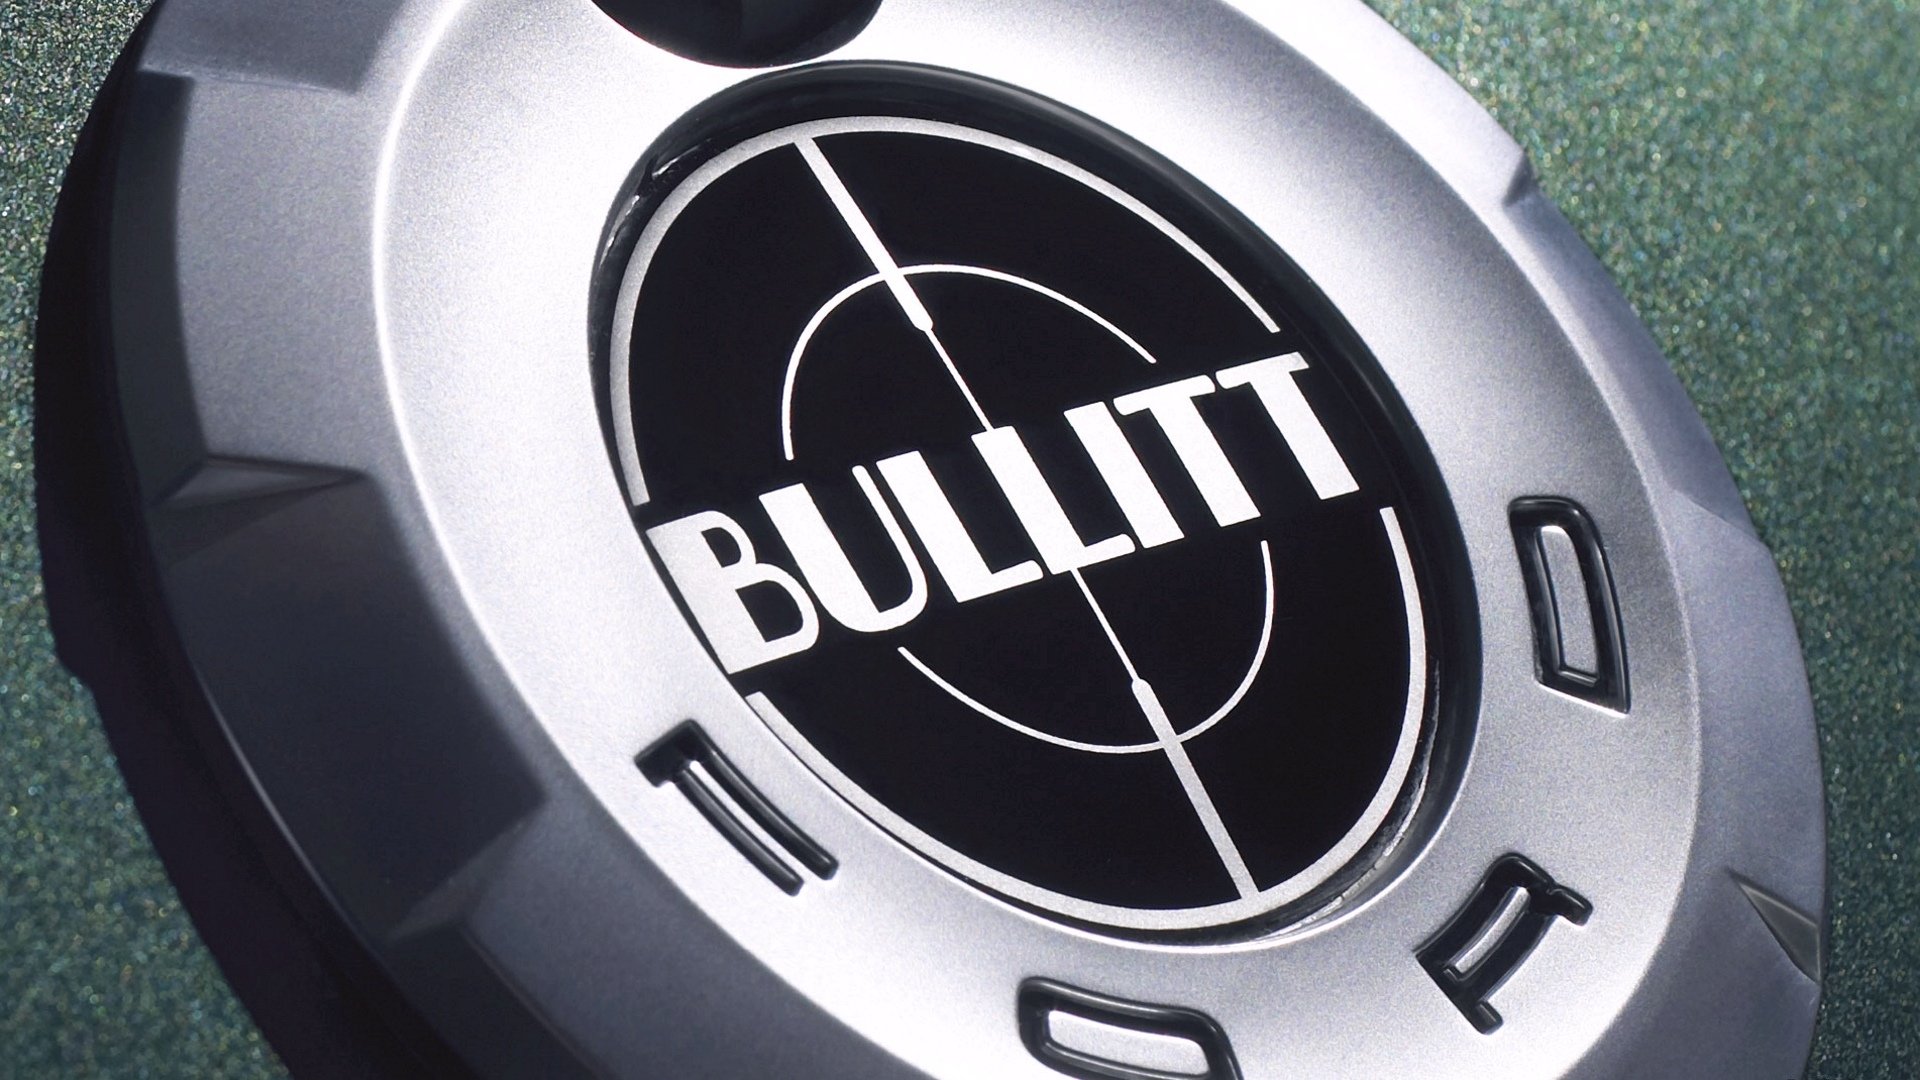 2008, Ford, Mustang, Bullitt Wallpaper